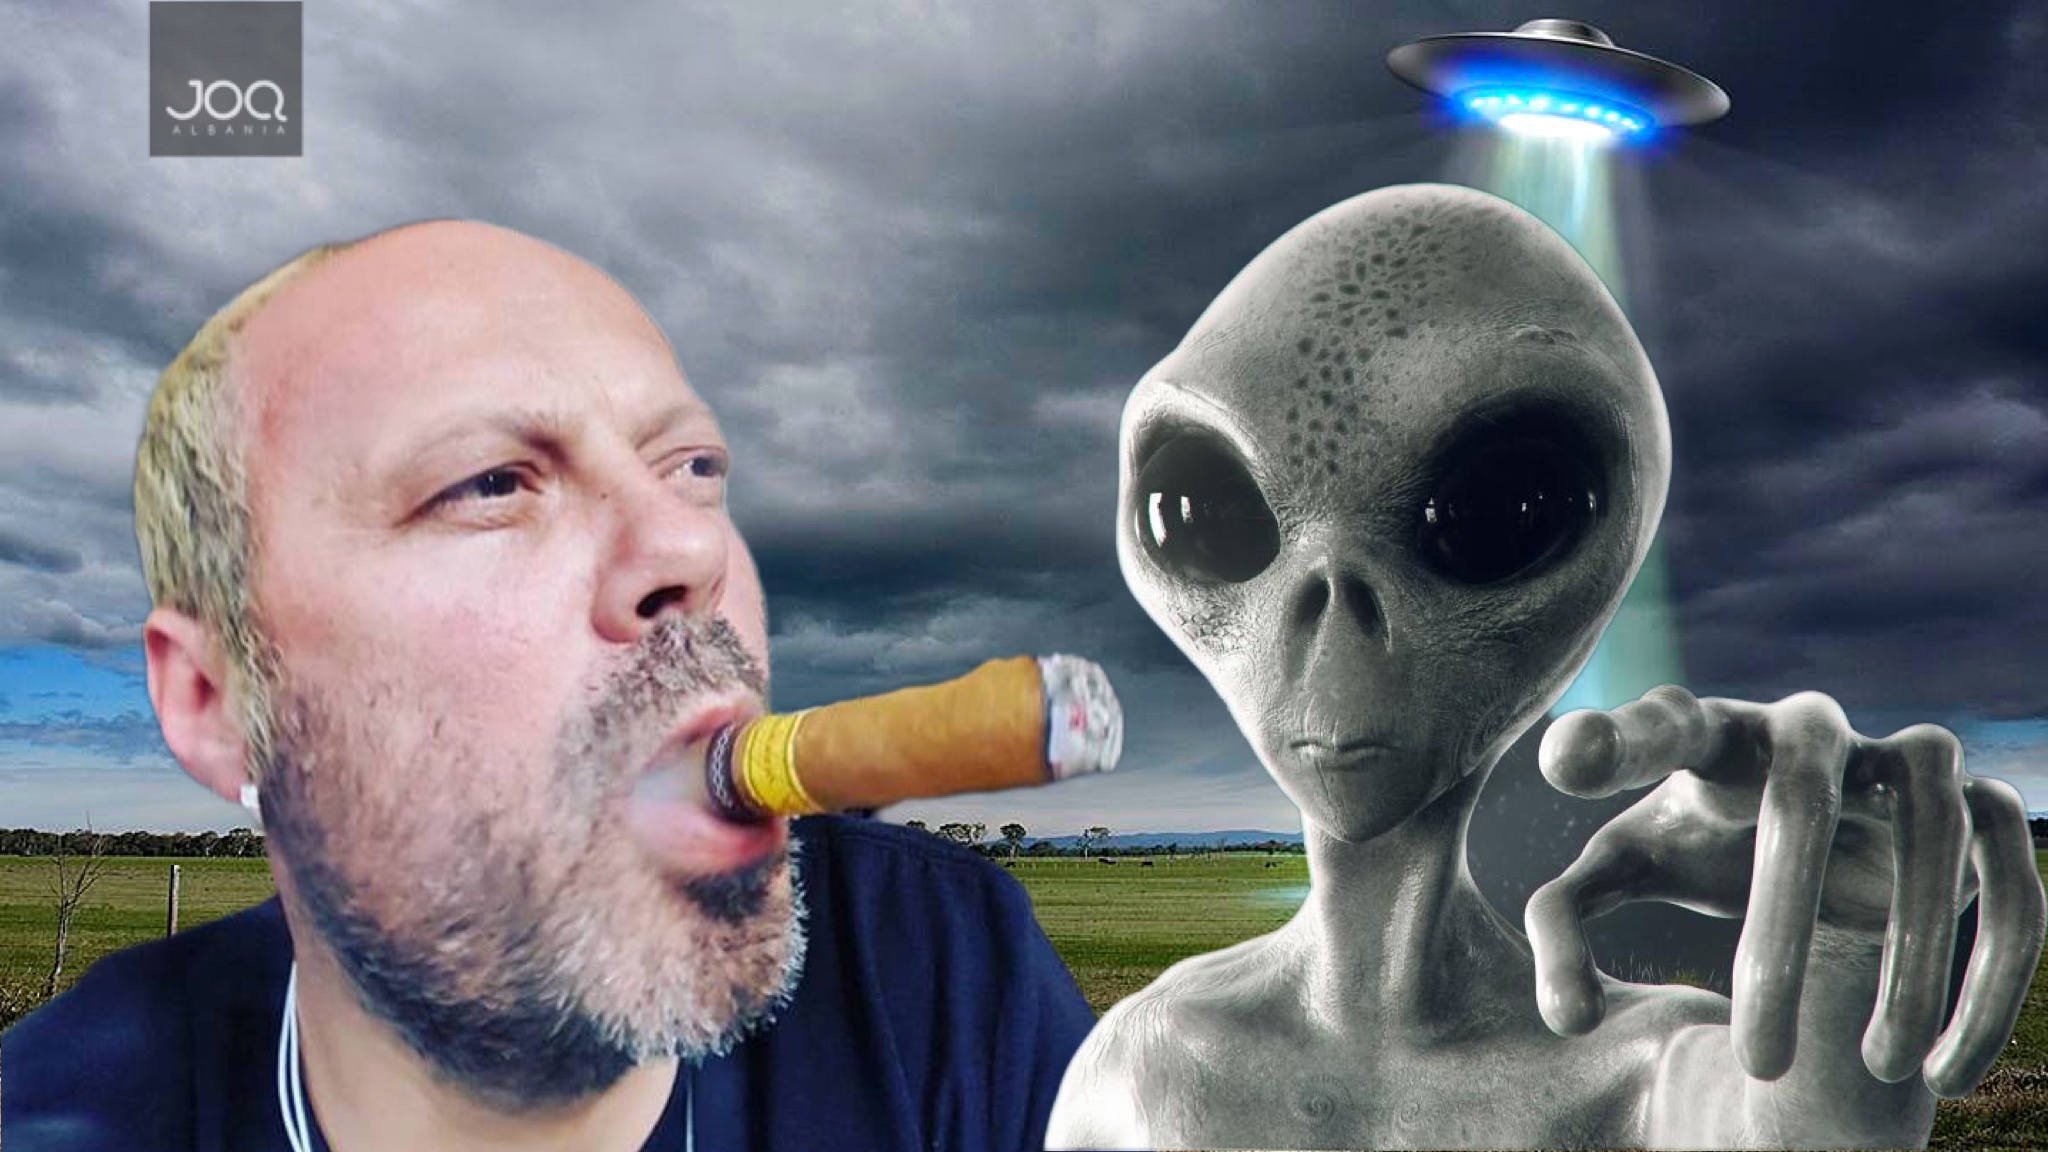 Endri Prifti: Flas me UFO-t